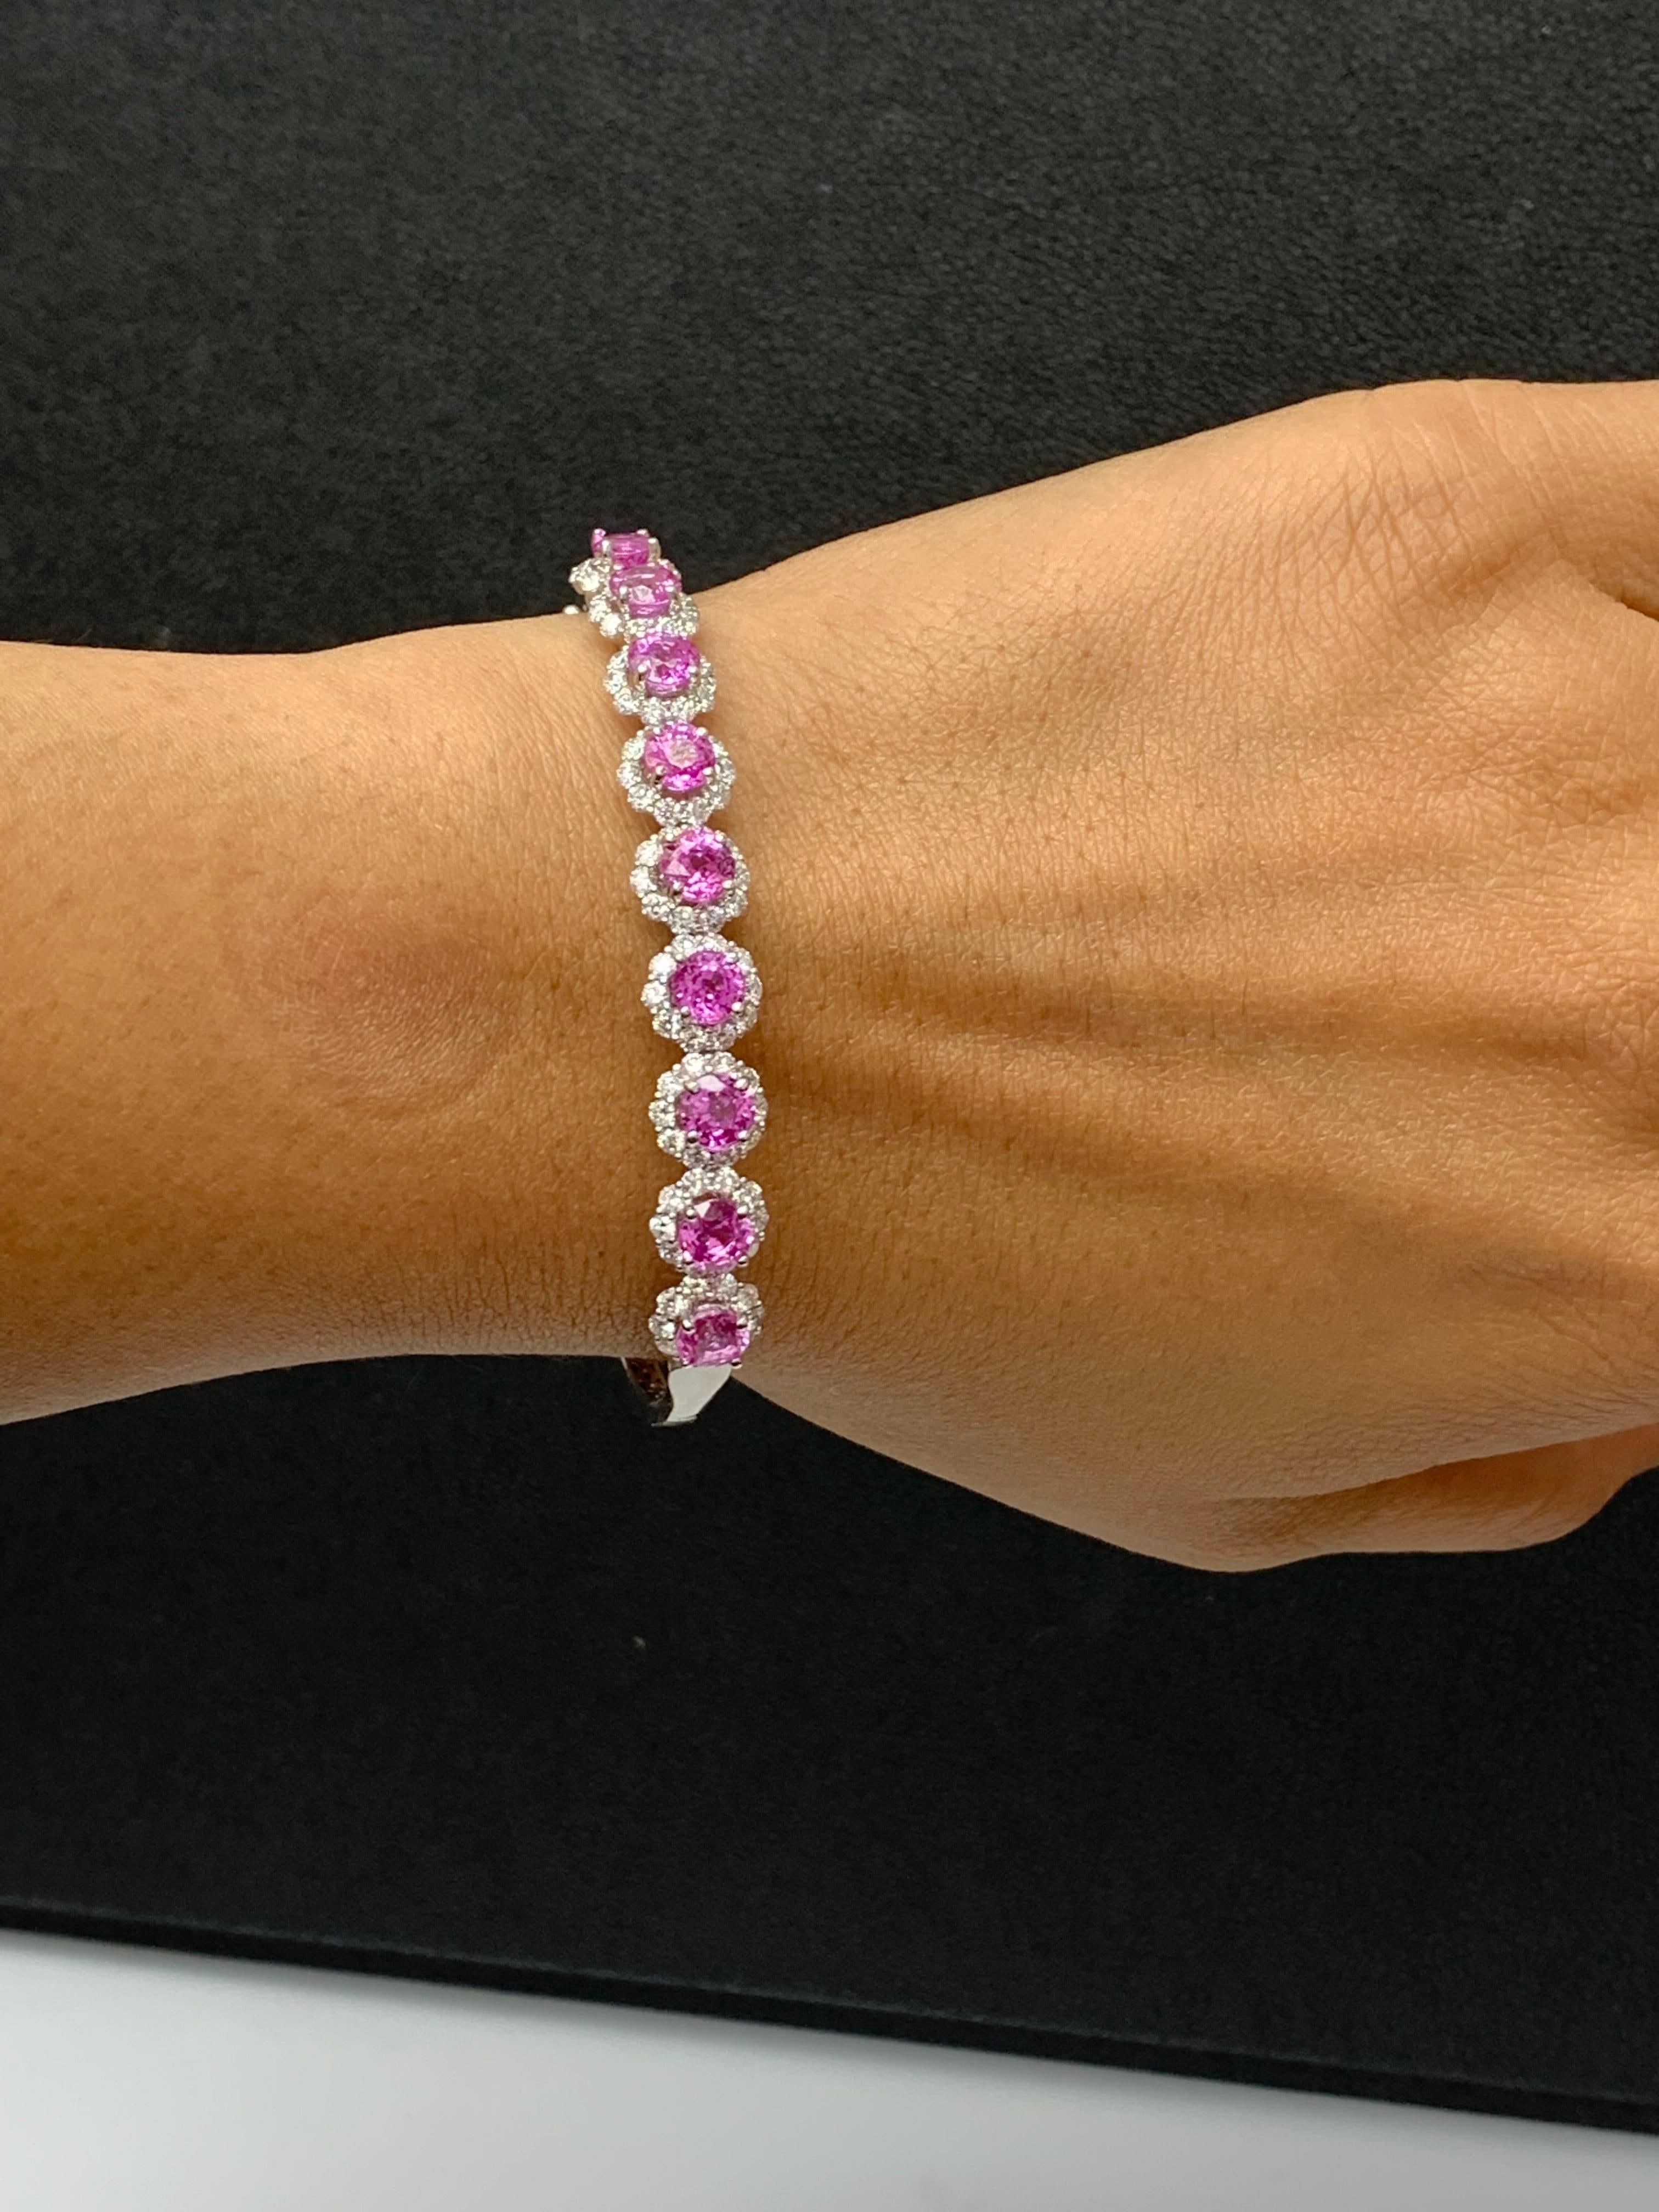 5.82 Carat Brilliant Cut Pink Sapphire Diamond Bangle Bracelet in 18k White Gold For Sale 3